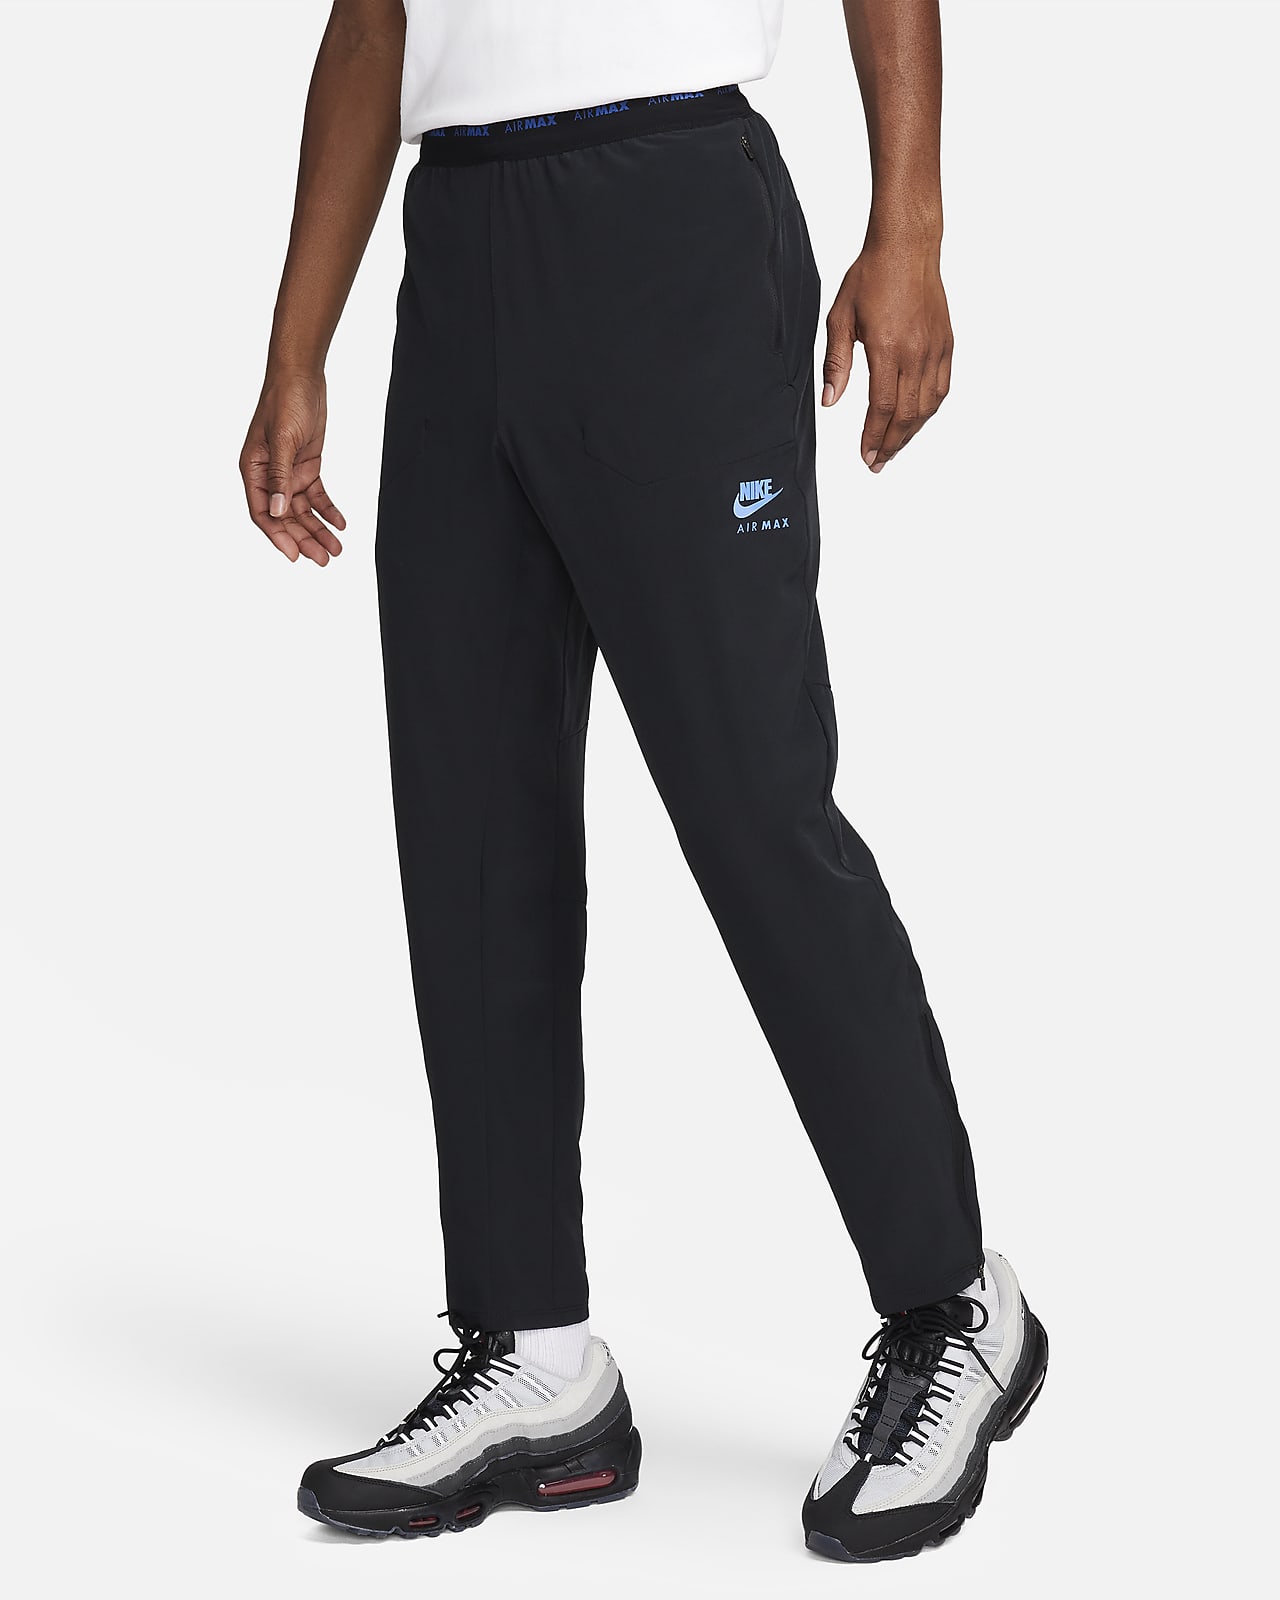 Pantaloni in tessuto Dri-FIT Nike Air Max – Uomo